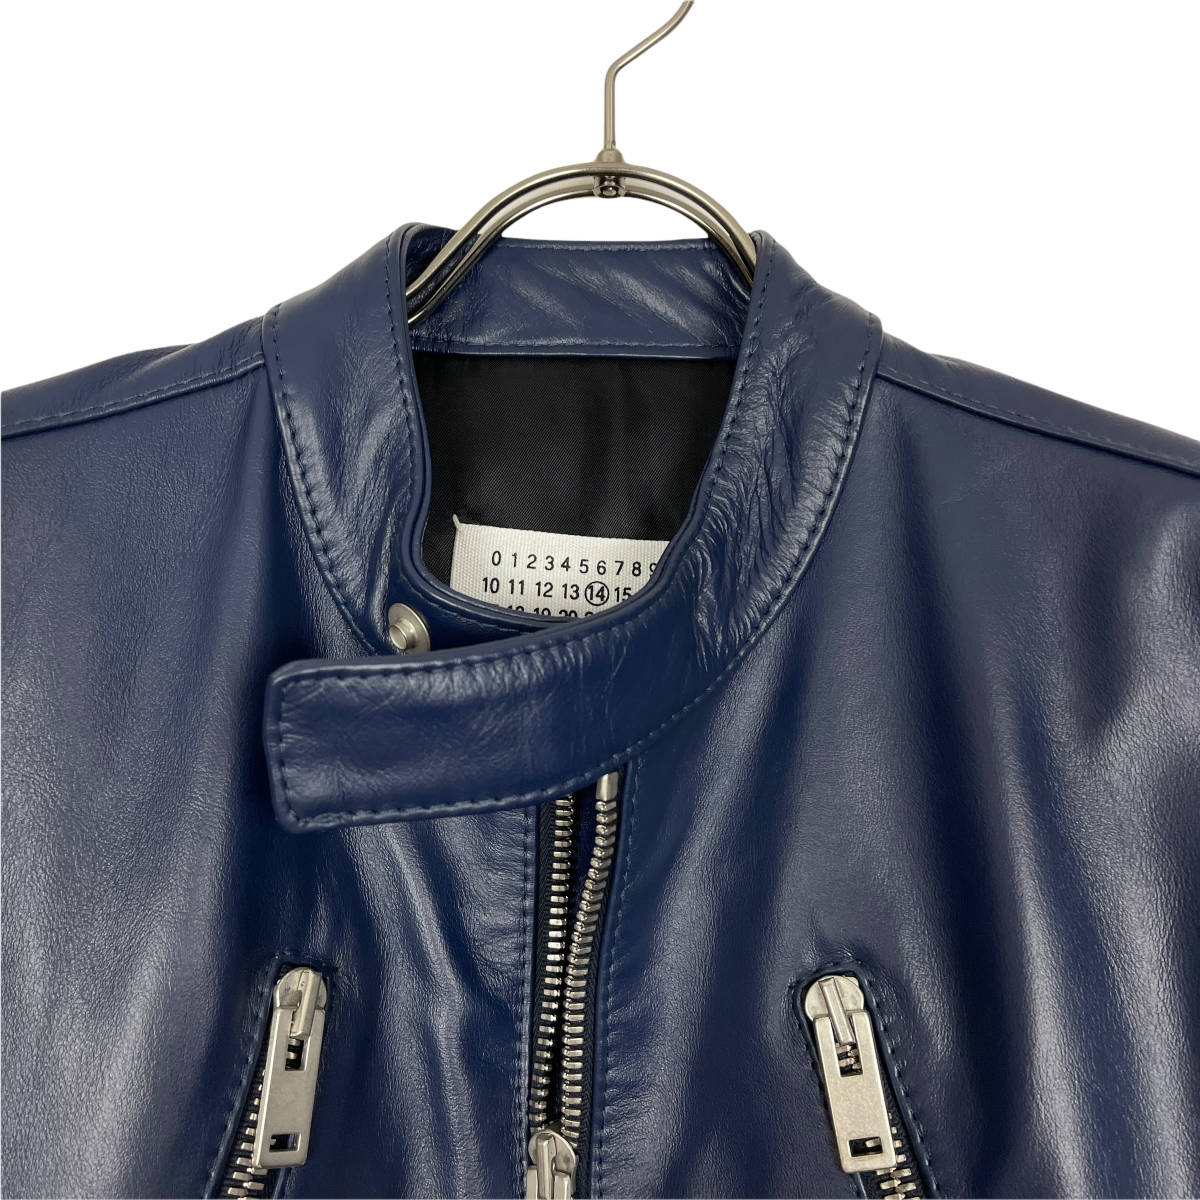 Maison Margiela(メゾン マルジェラ) 八の字 leather jacket 2016 (navy)_画像2